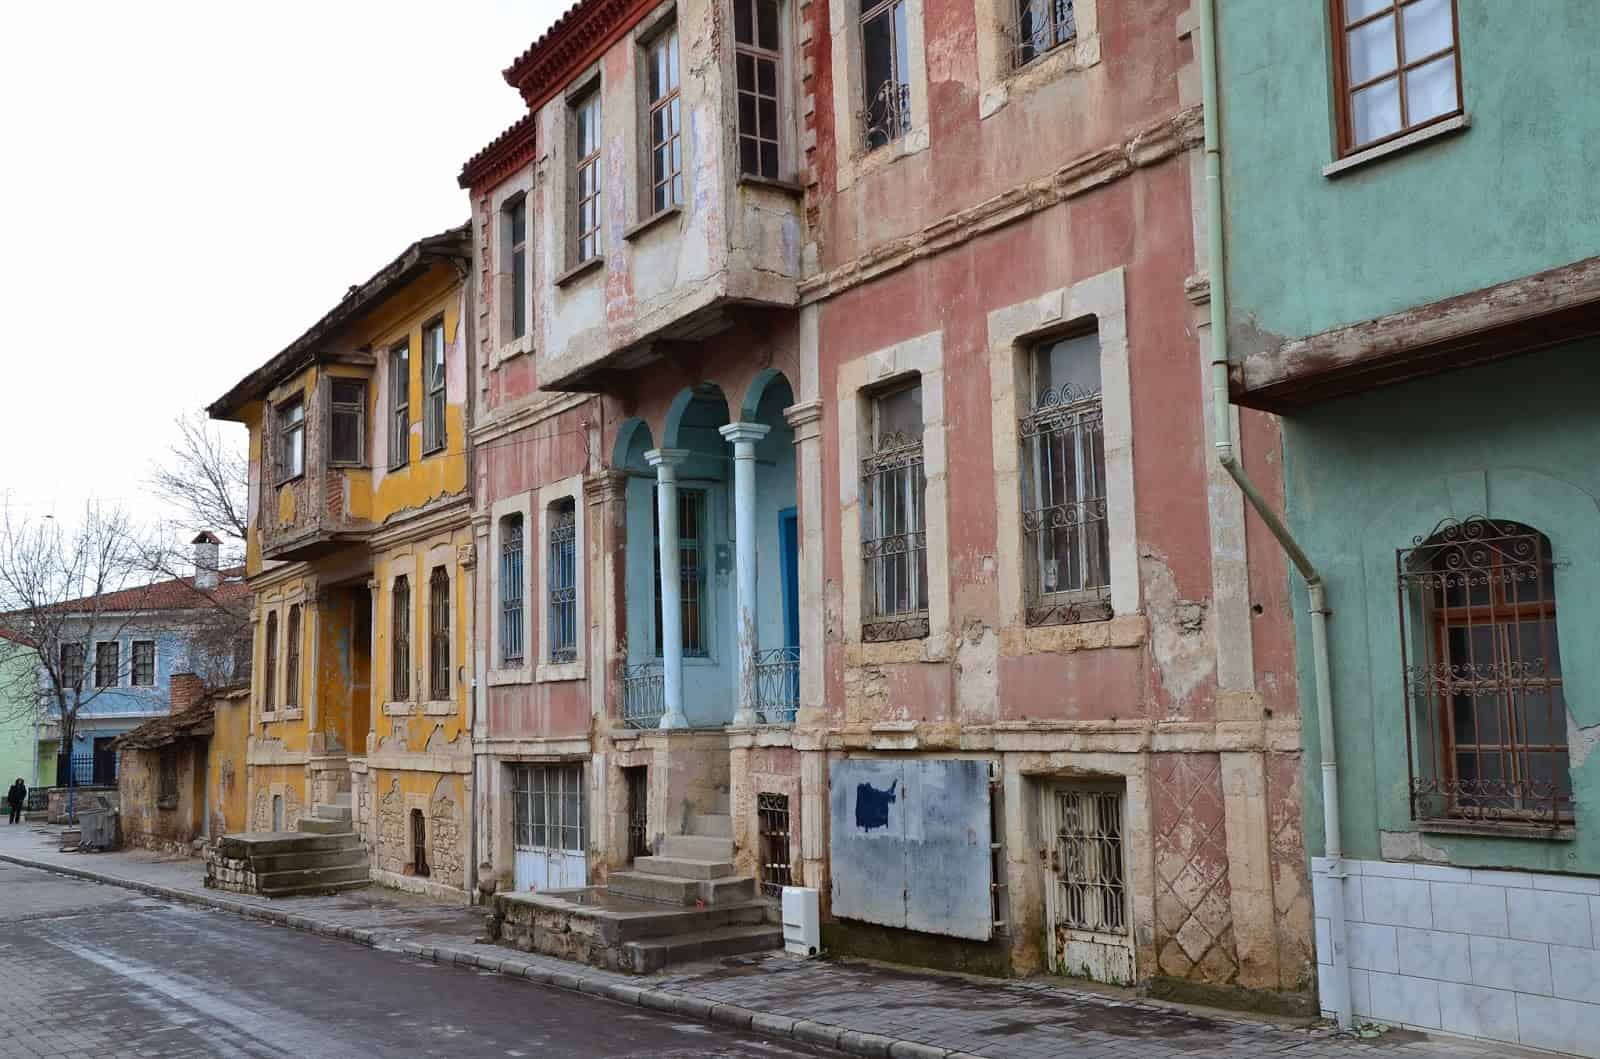 Ottoman homes in Uşak, Turkey